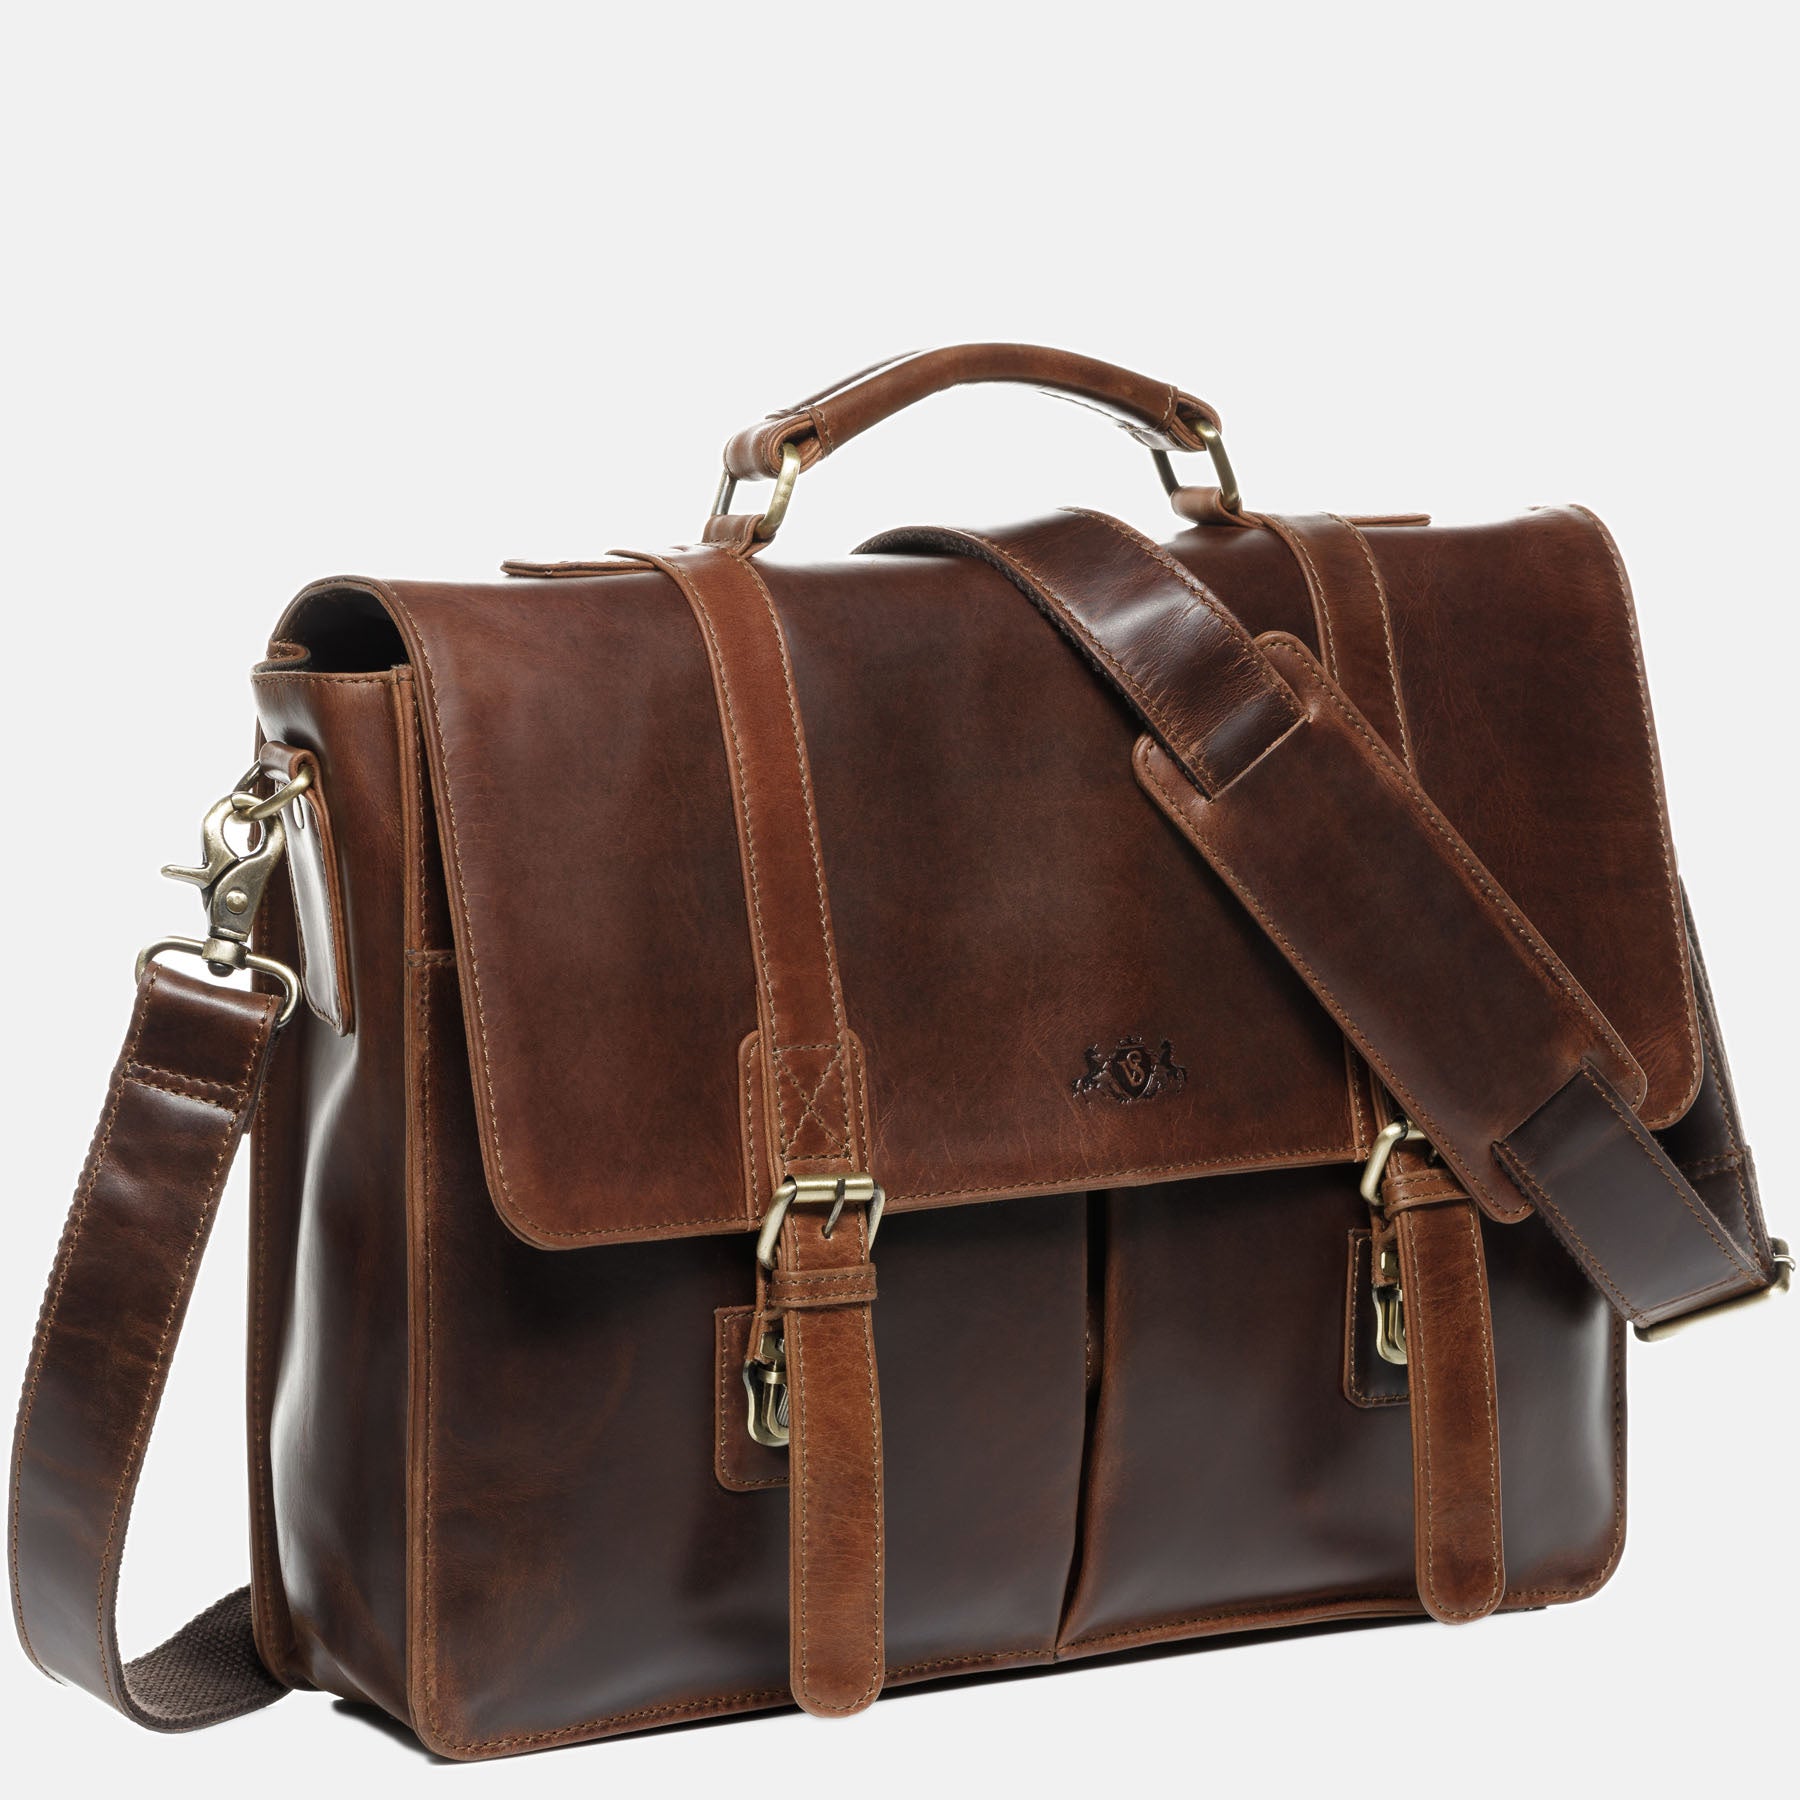 Briefcase HARVORD natural leather brown-cognac